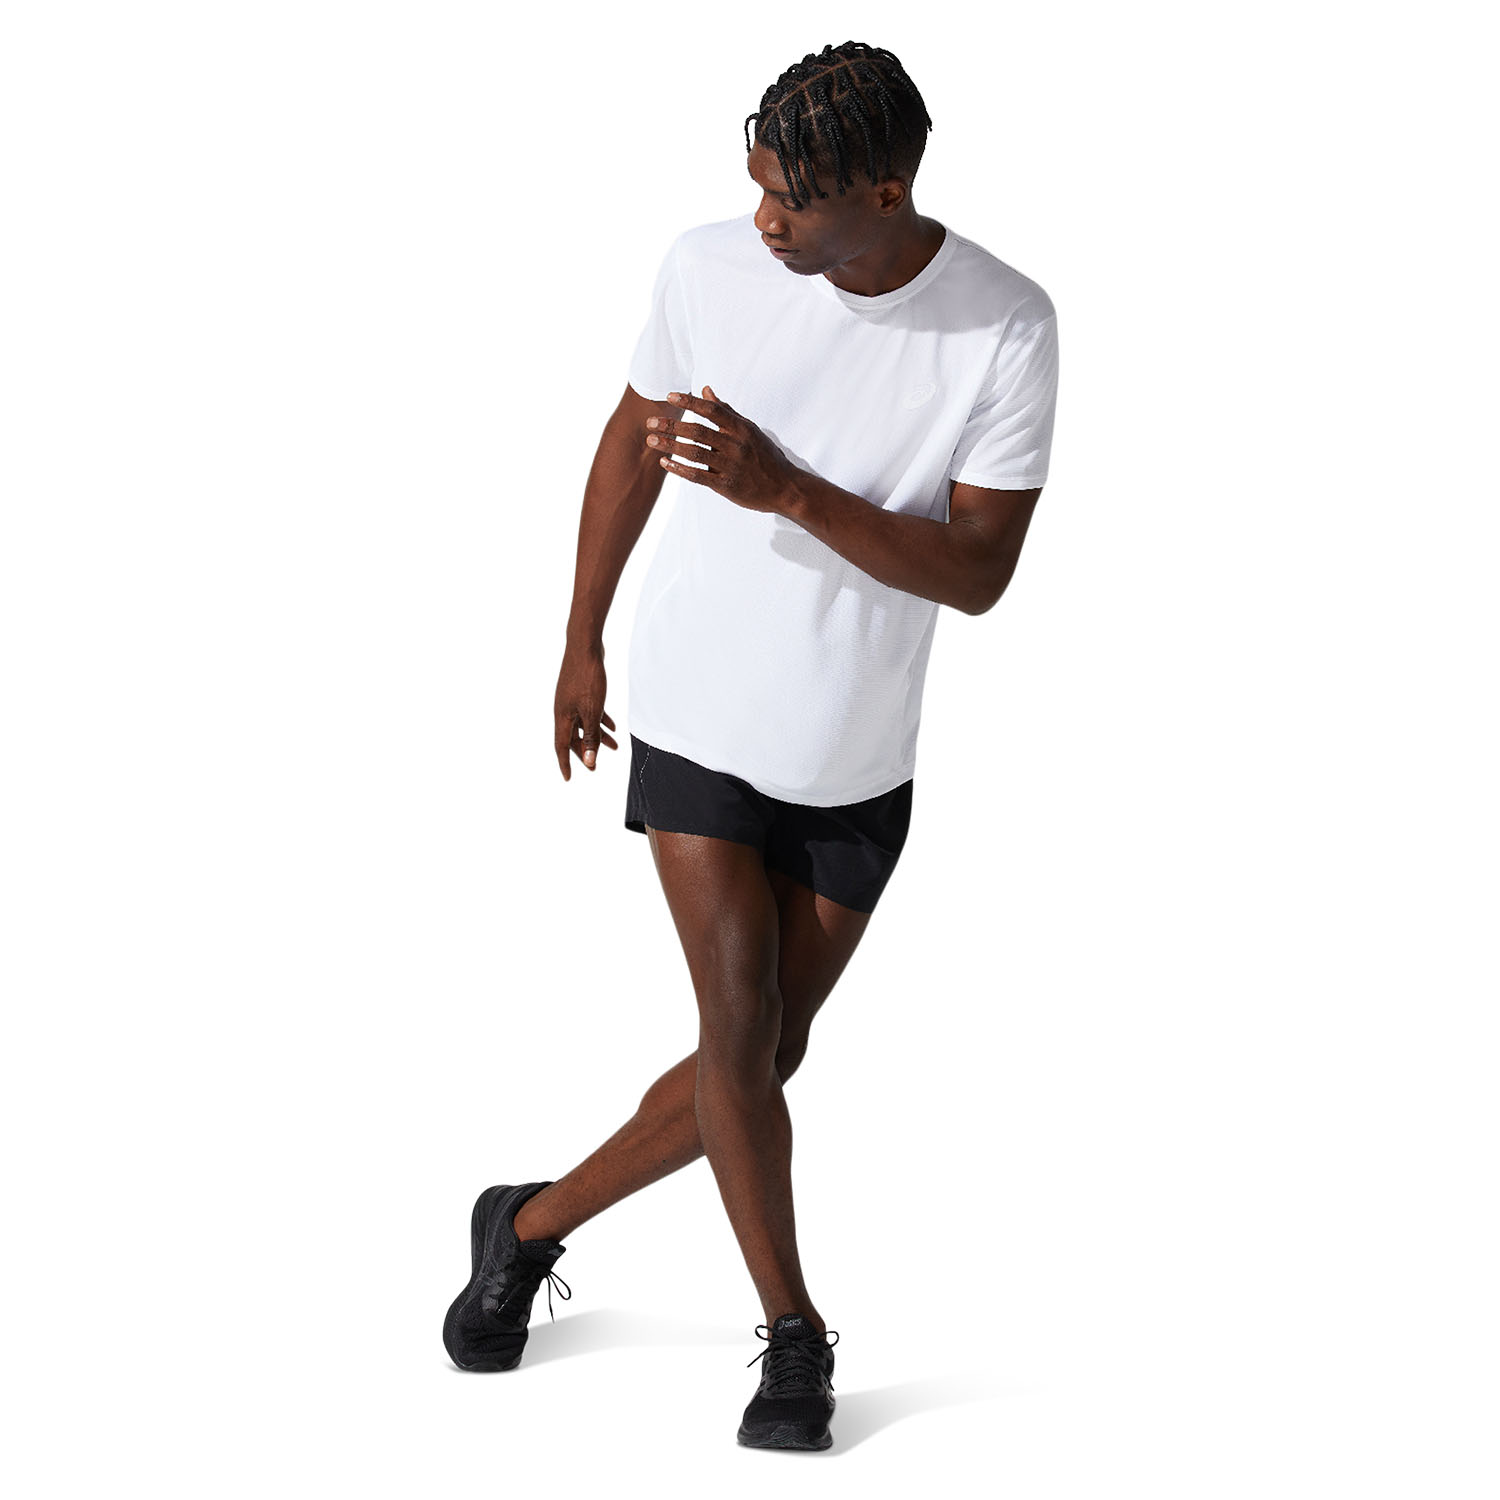 Asics Core 5in Shorts - Performance Black/Graphite Grey